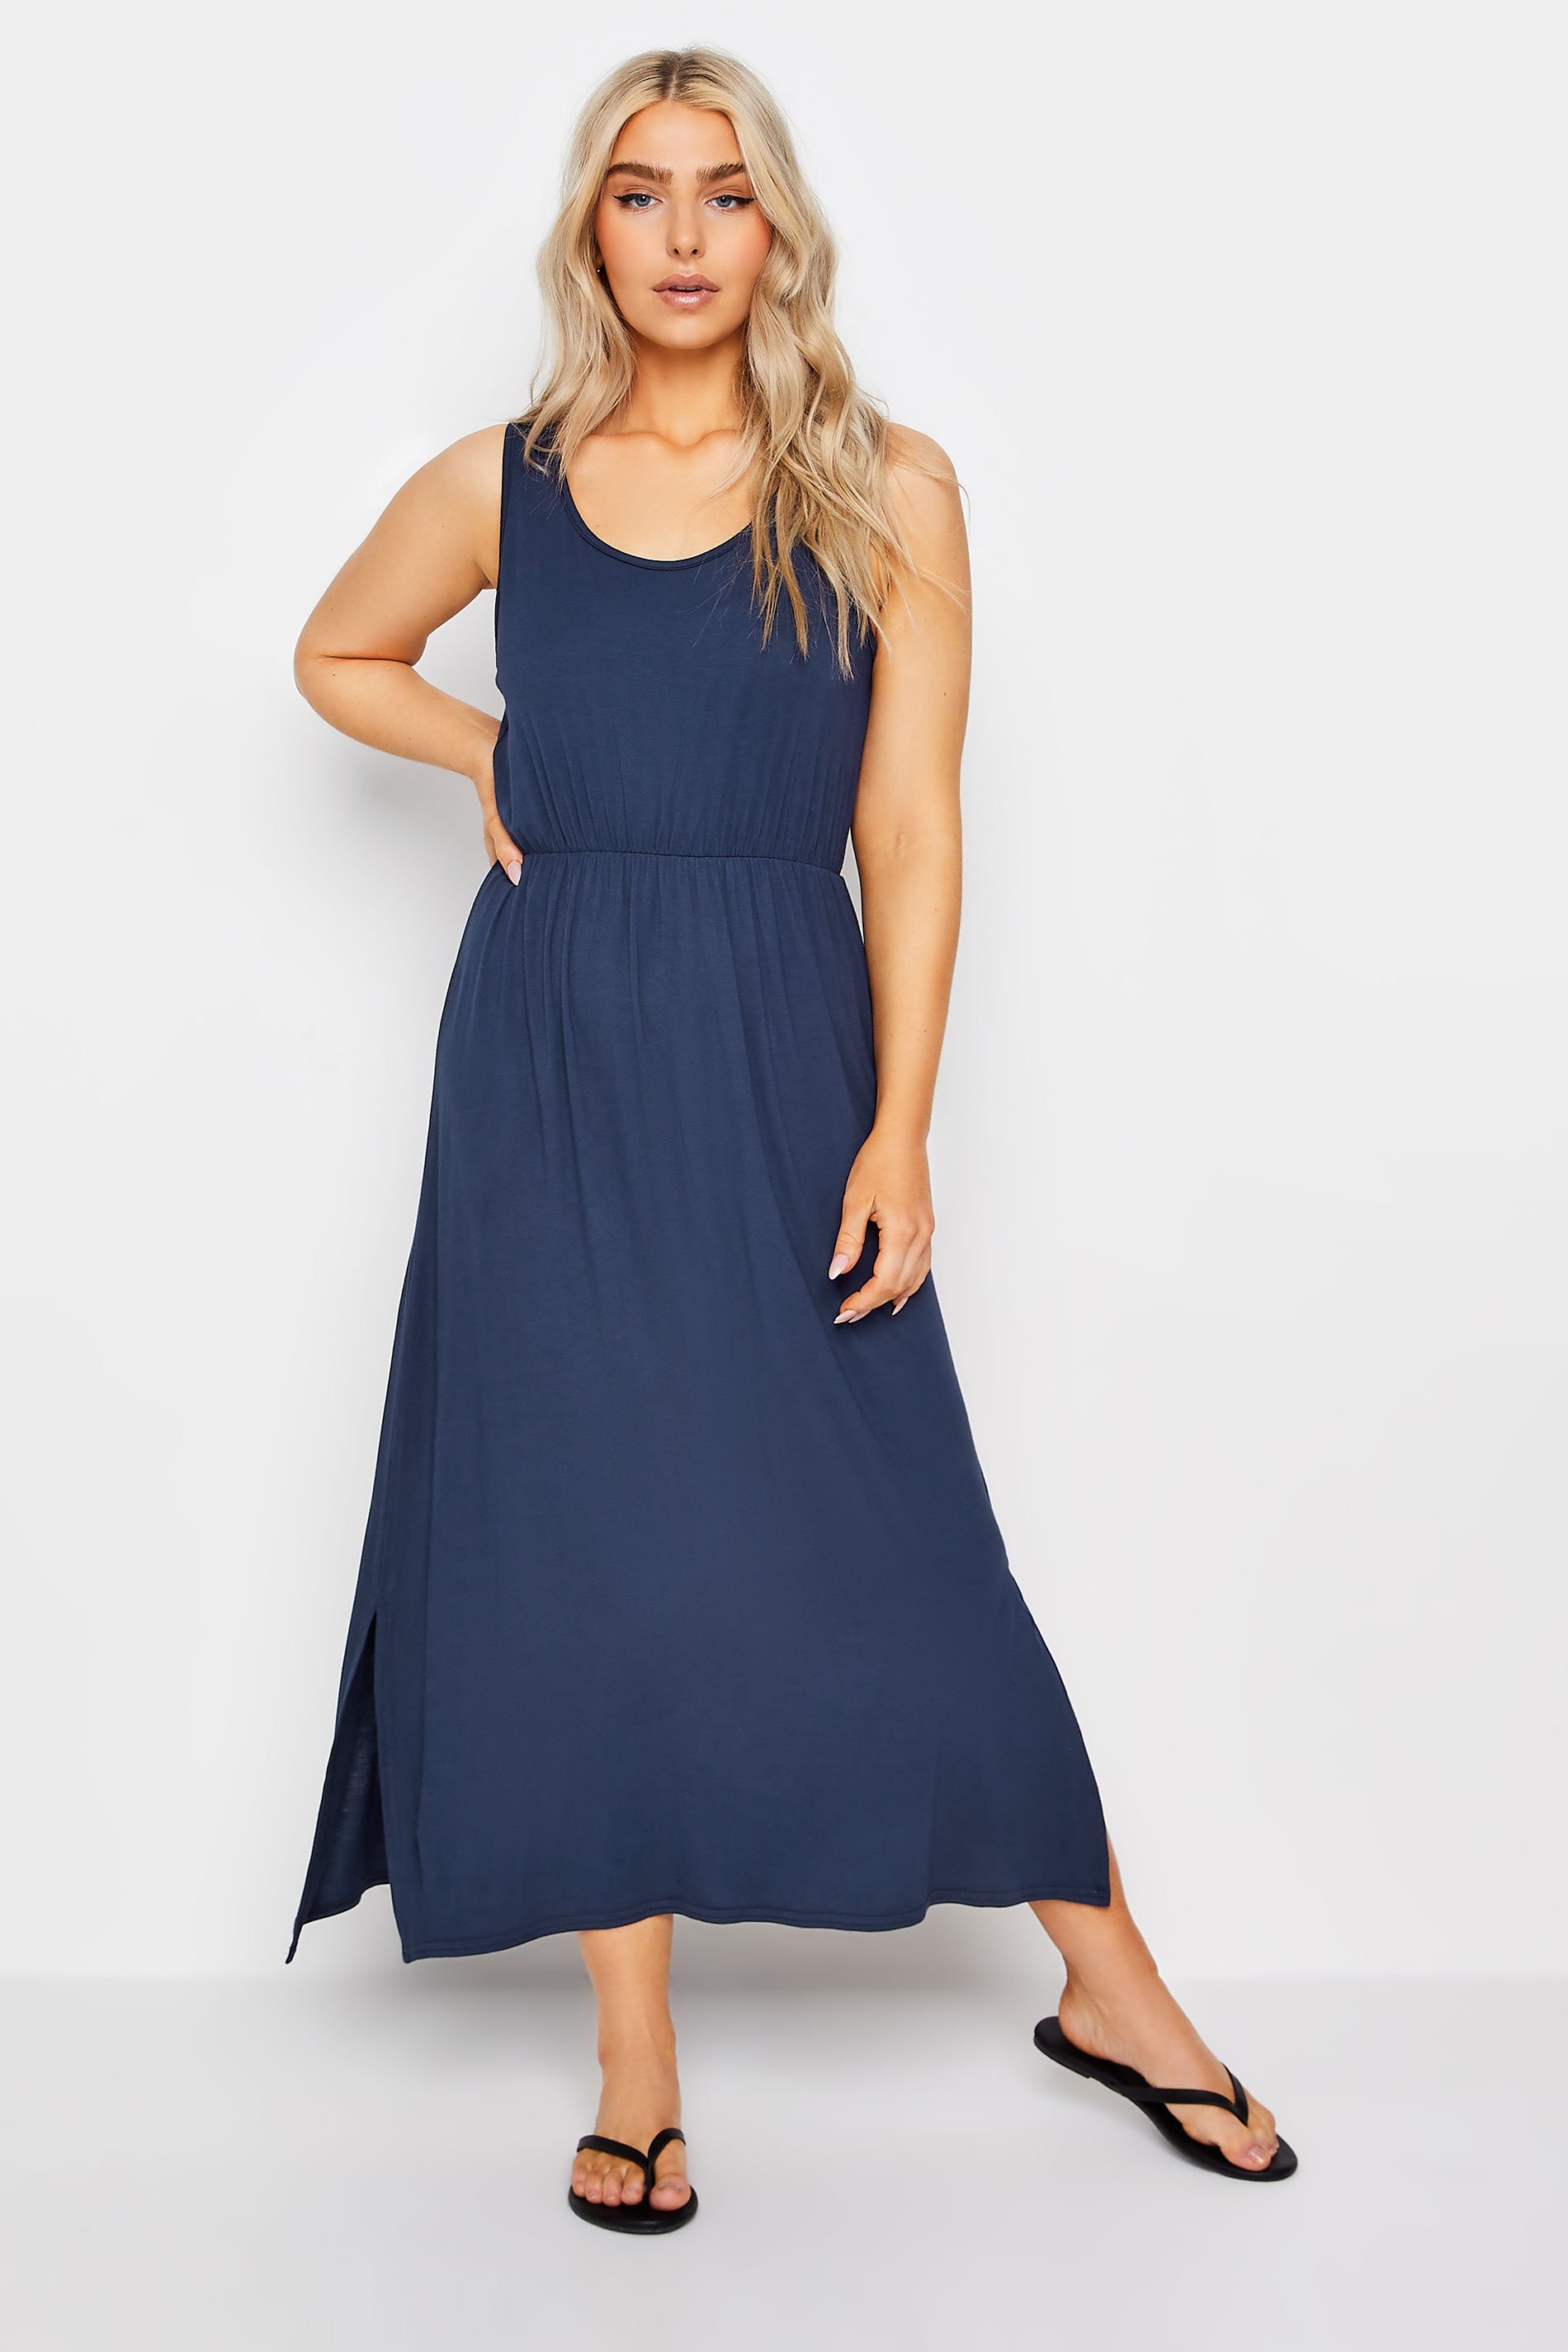 M&Co Navy Blue Scoop Neck Jersey Maxi Dress | M&Co 2